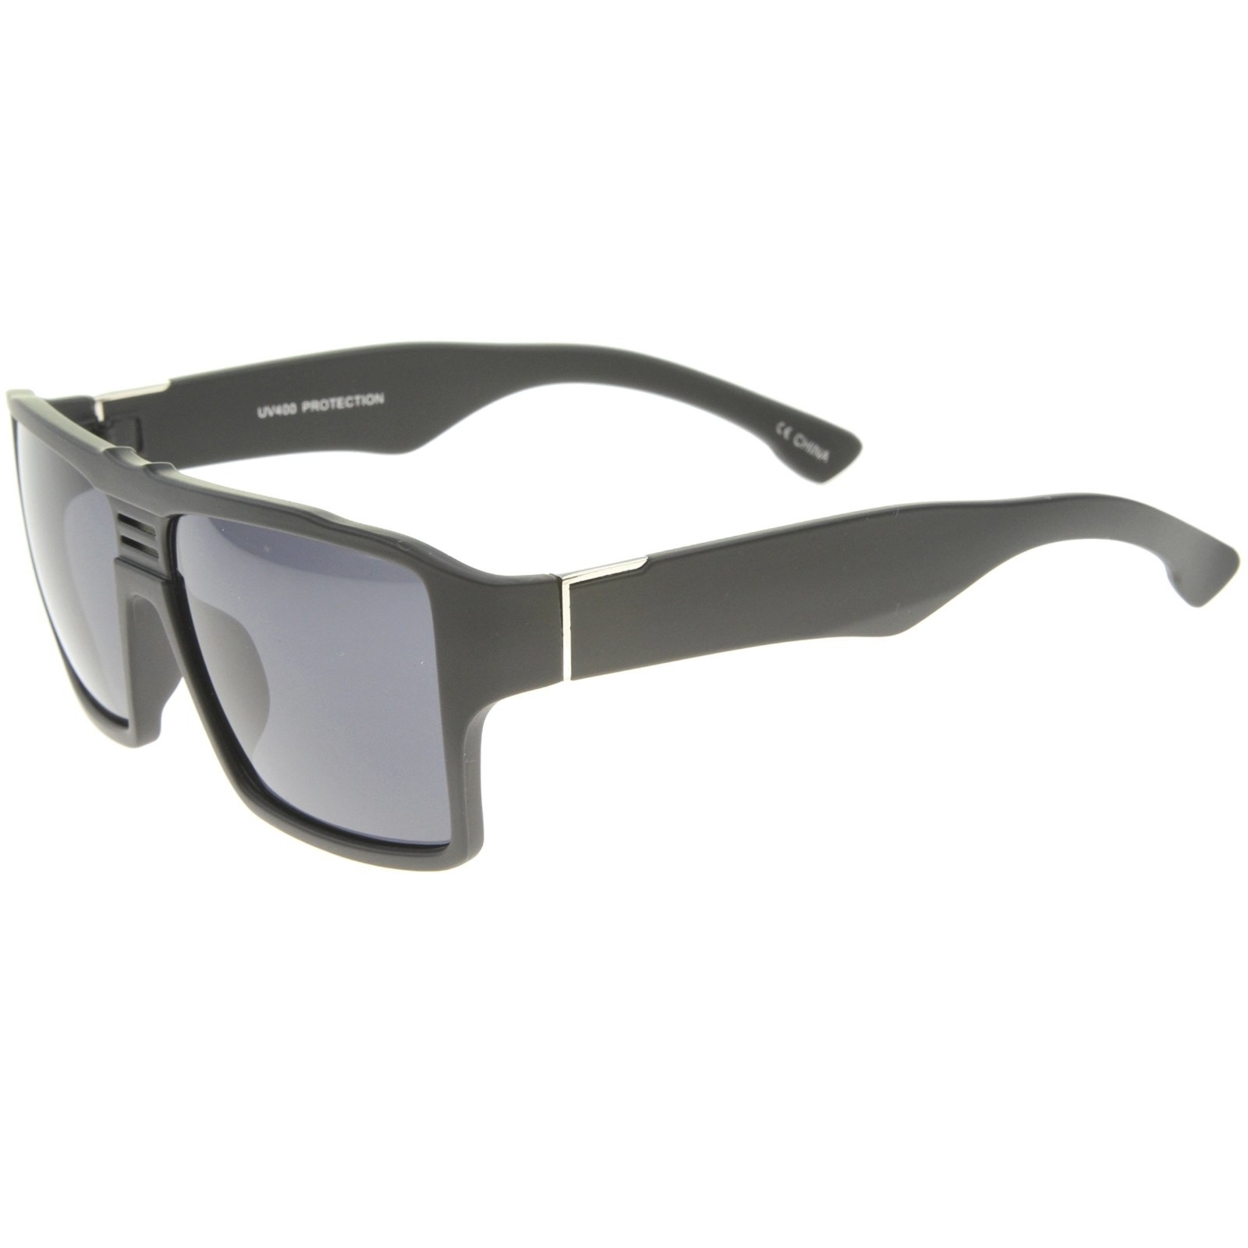 Men's Modern Casual Flat Top Wide Temple Rectangle Aviator Sunglasses 57mm - Tortoise / Brown